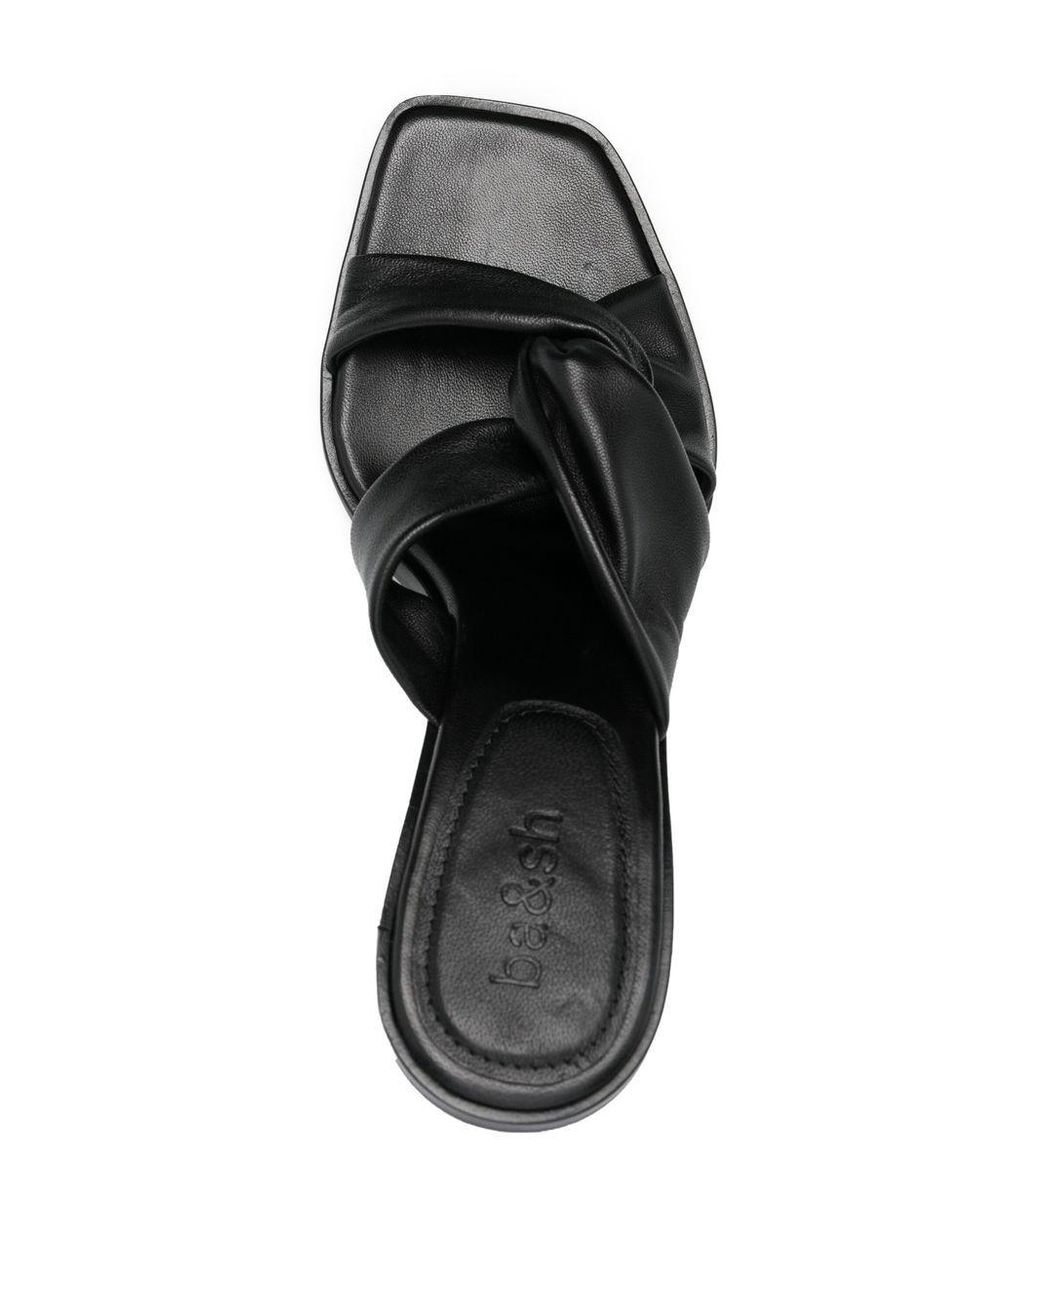 Ba&sh Capioka Leather High Heel Sandals in Black | Lyst